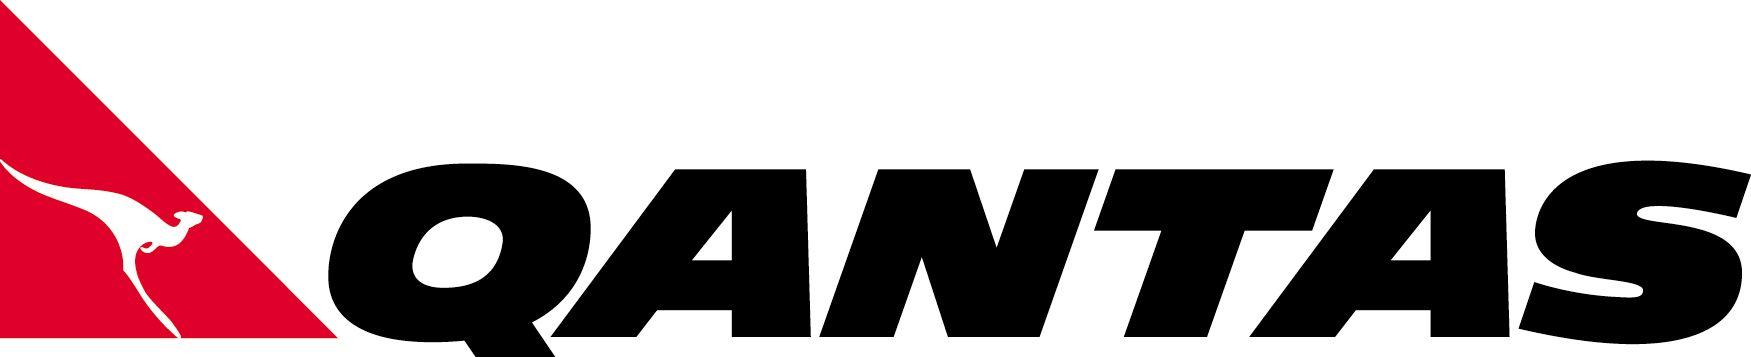 Australian Airlines Logo - Jetstar Airways (Australia) | World Airline News